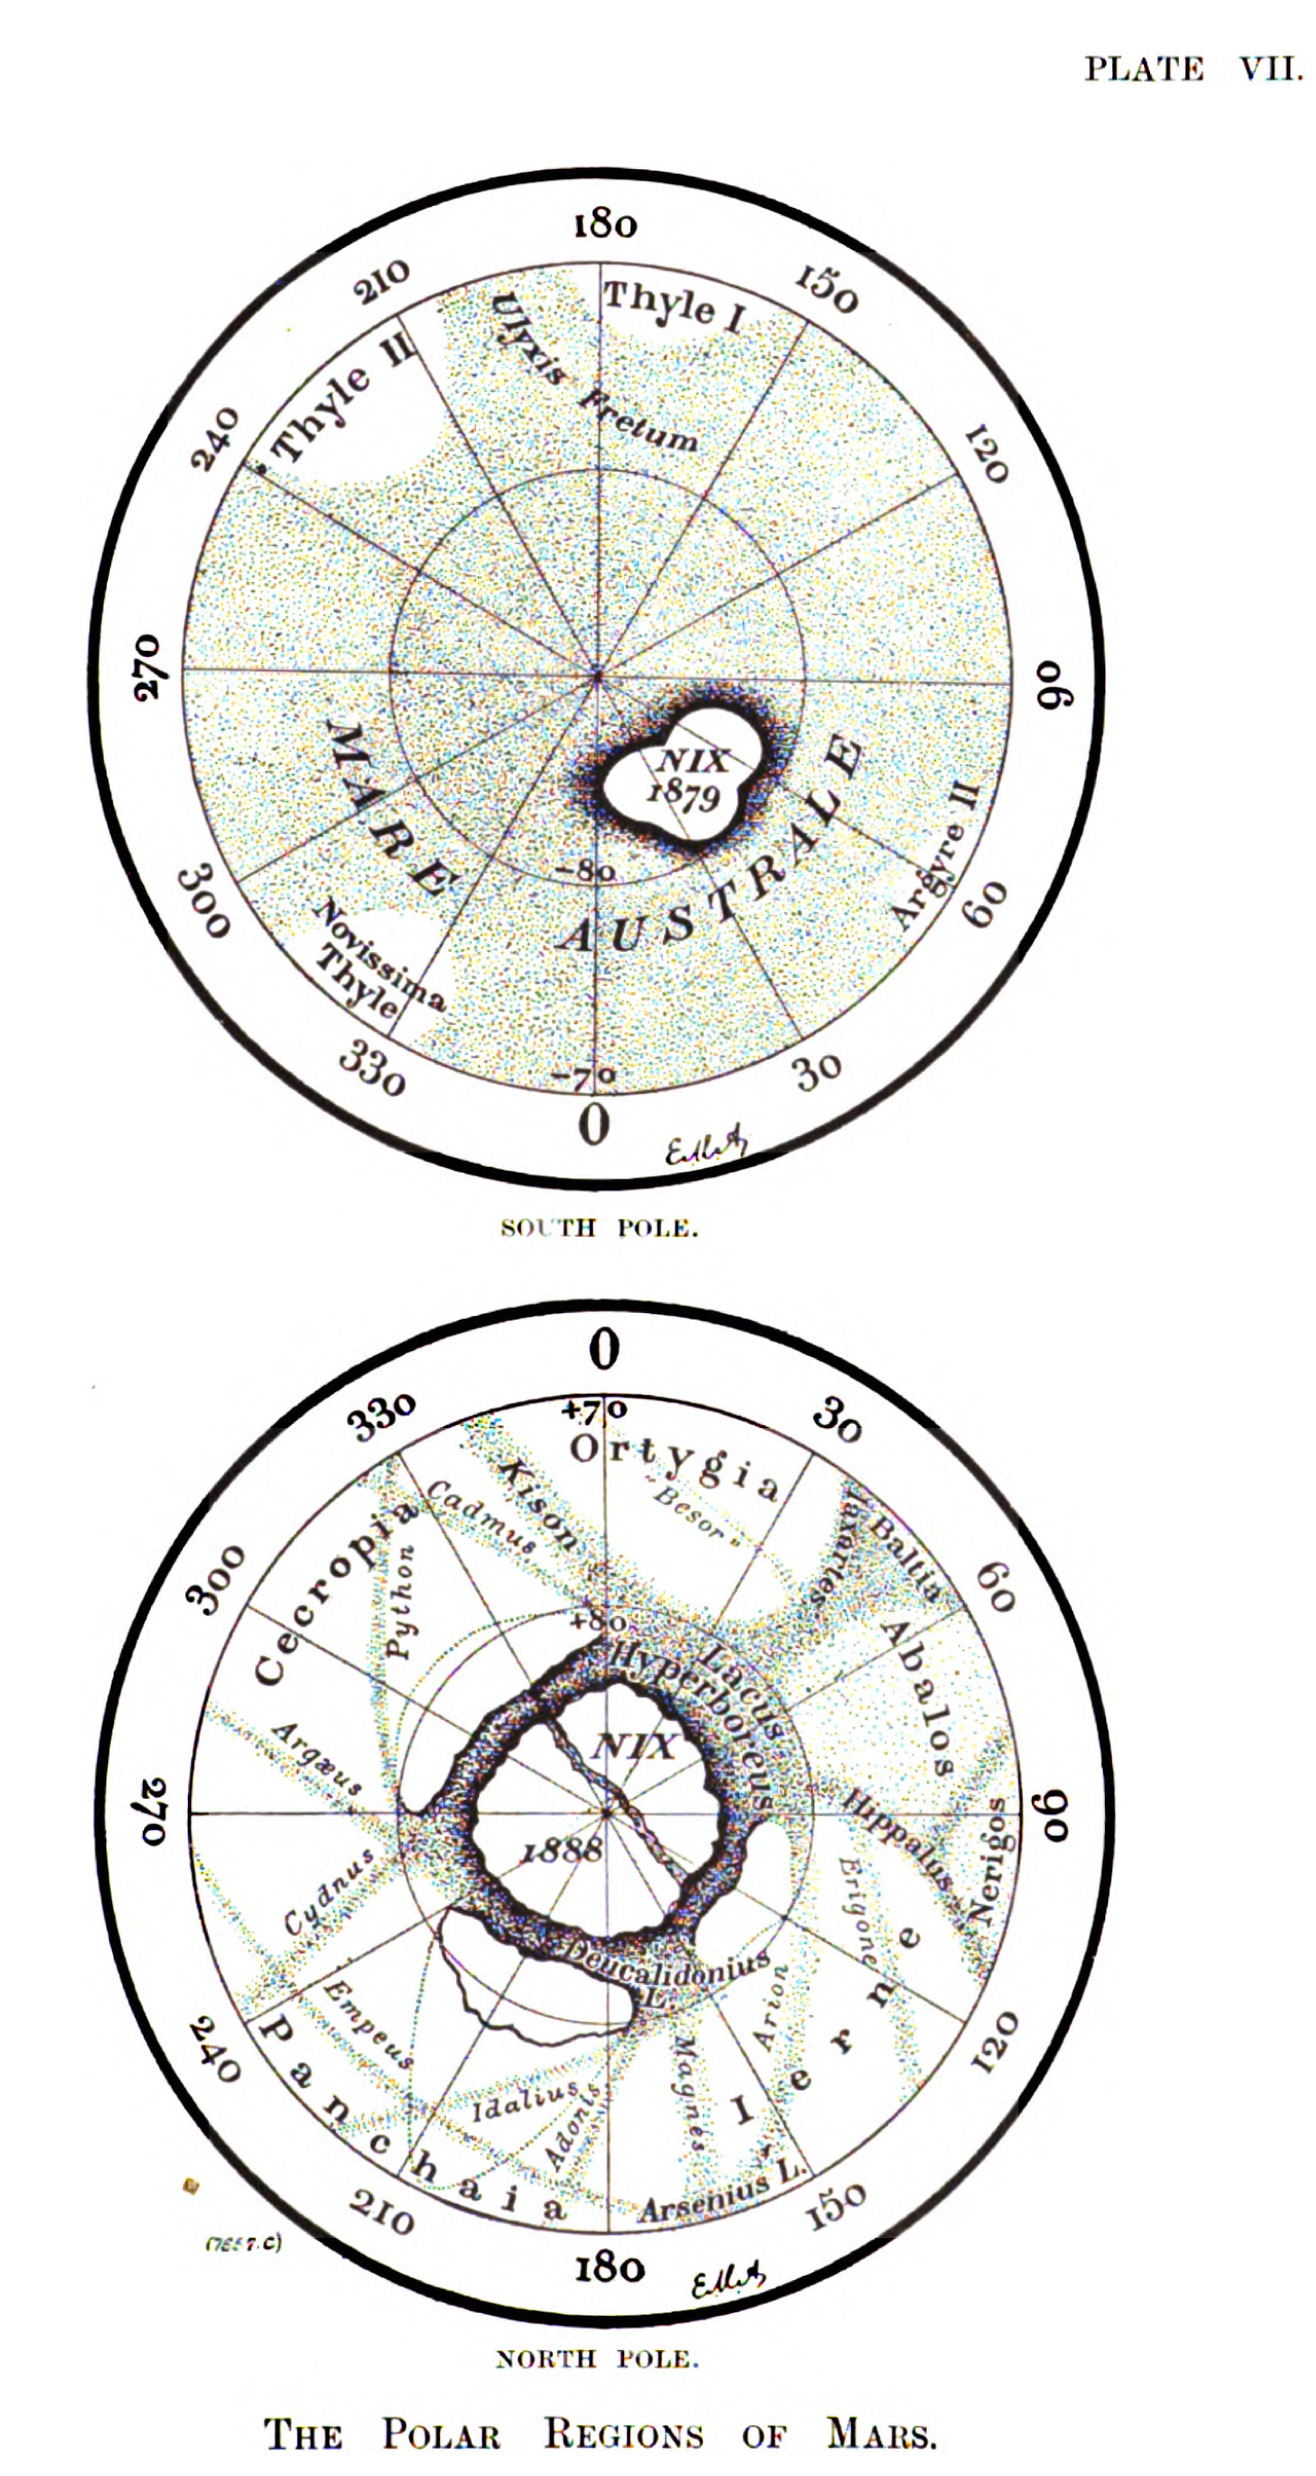 Antoniadi’s Polar Maps of Mars 1900-1901